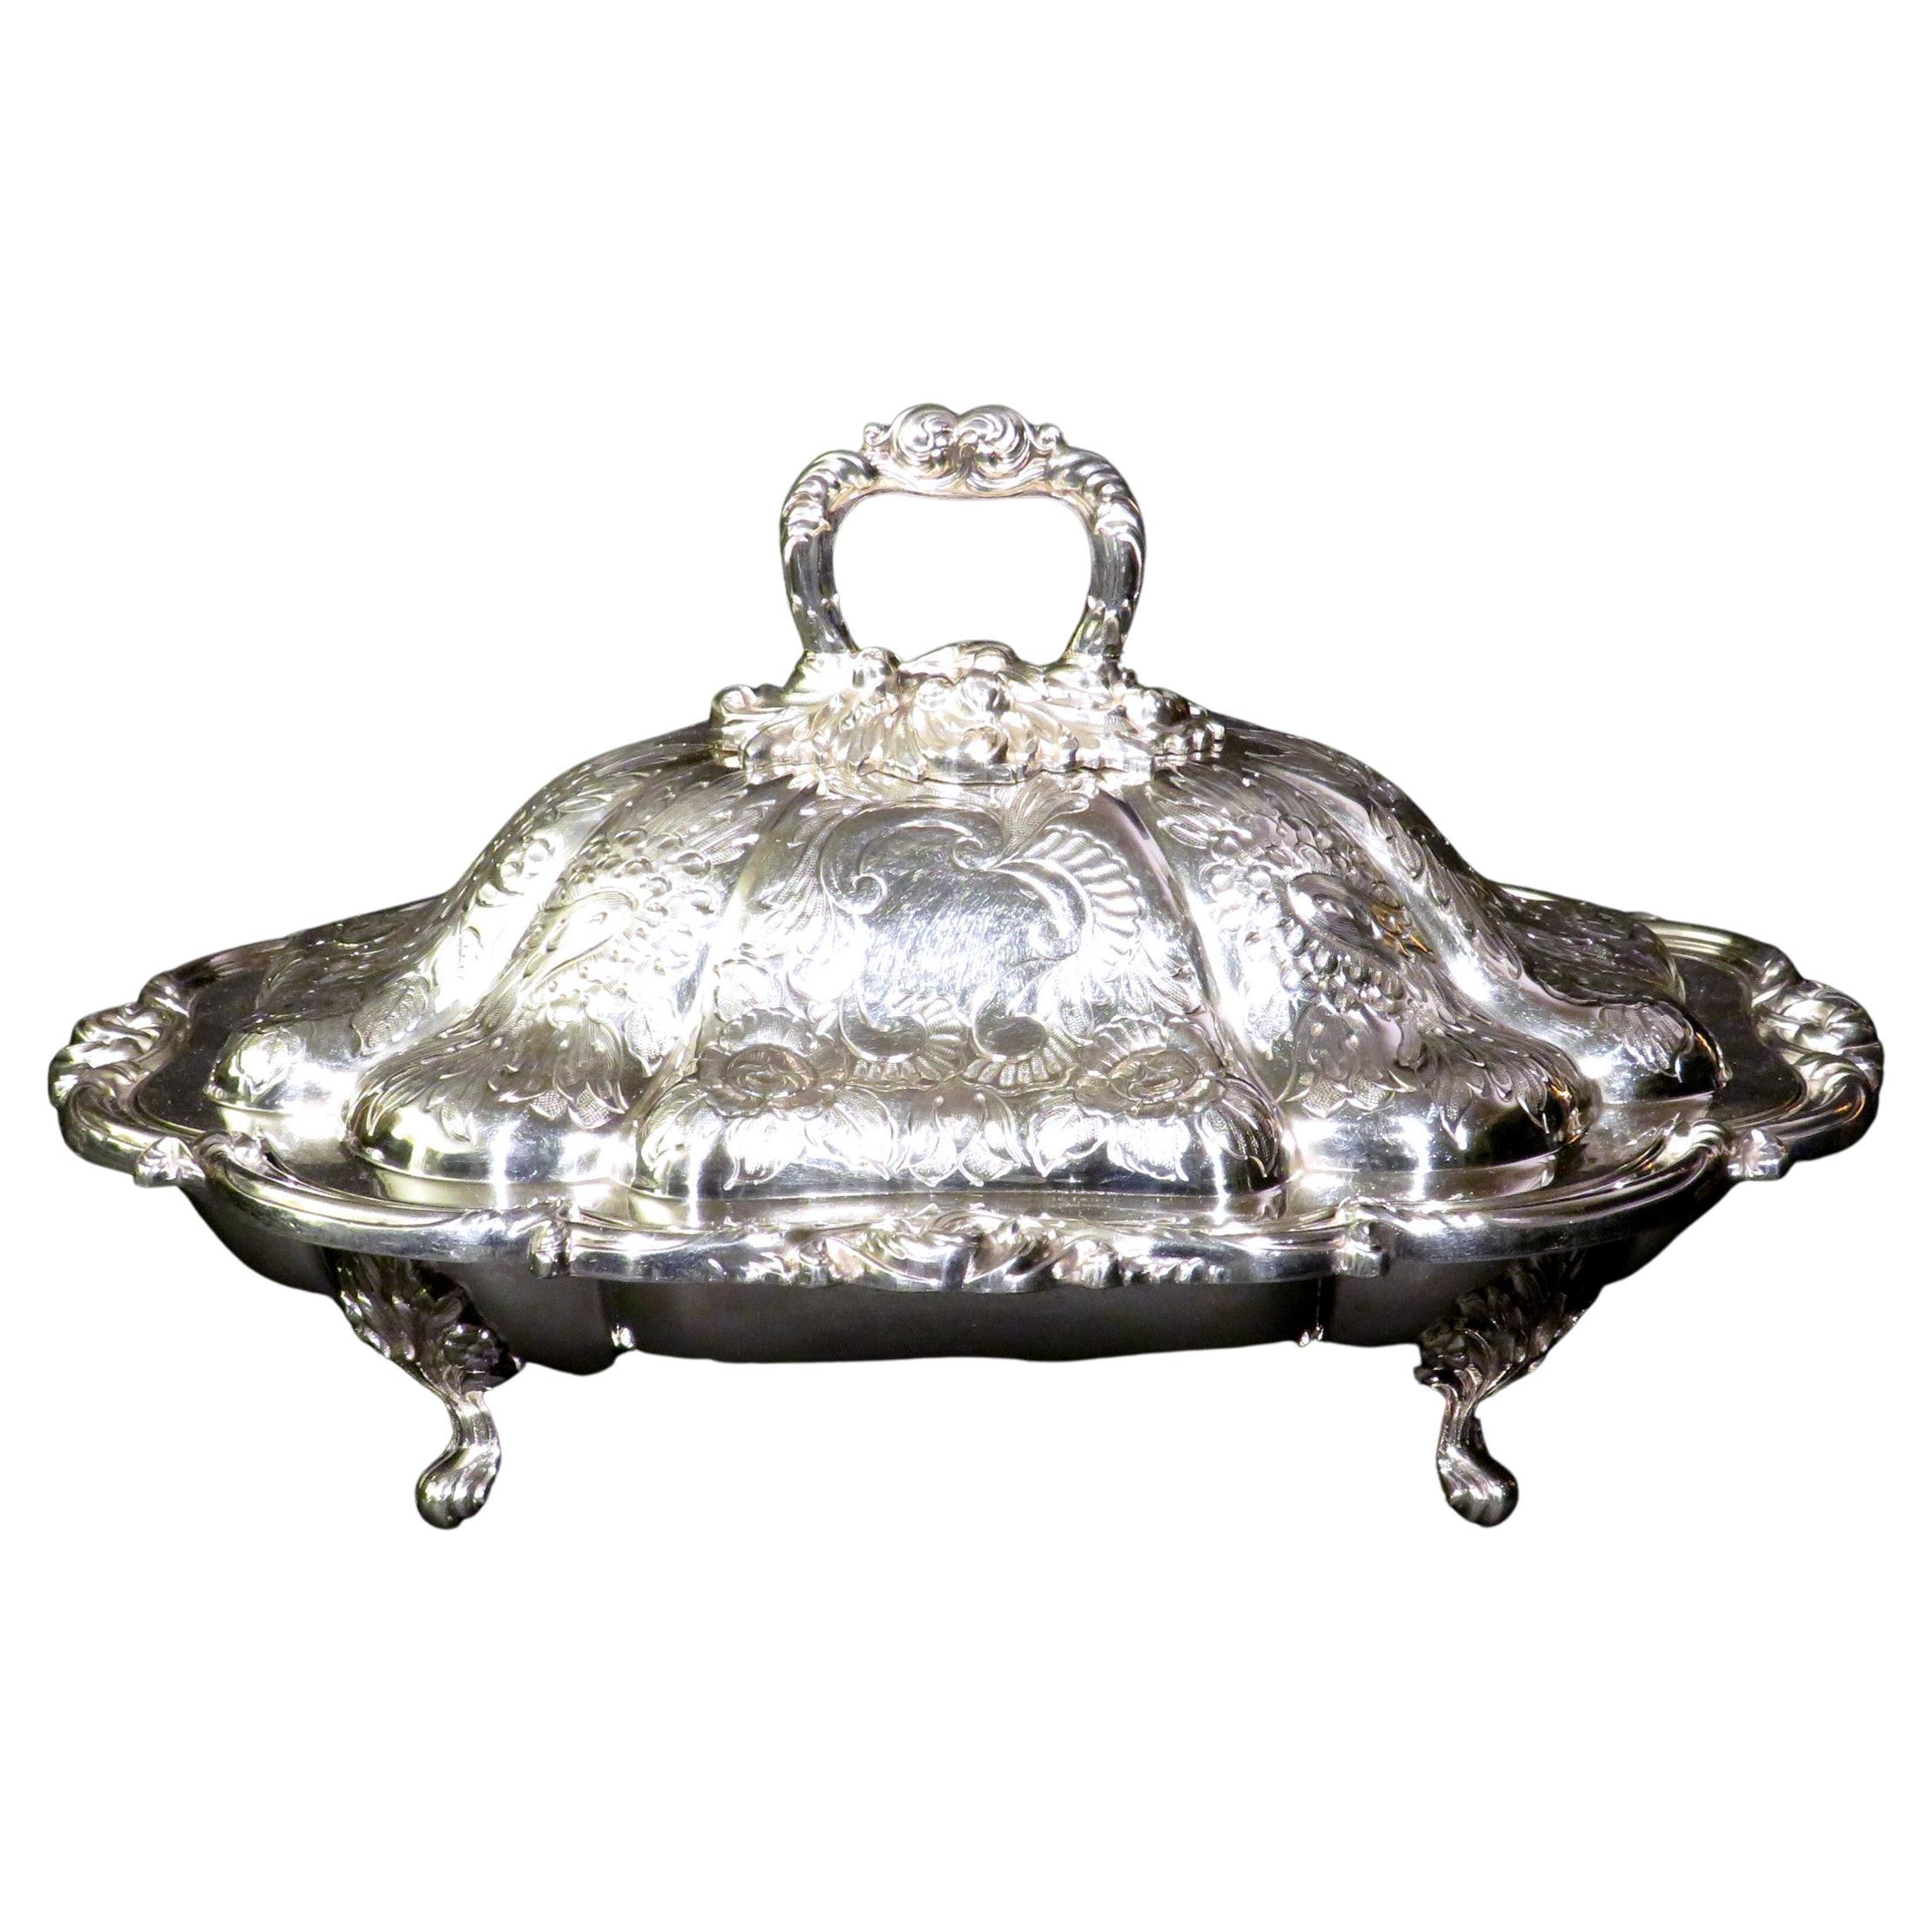 A Fine Early 20th Century Silver Plated Entrée Dish, England Circa 1900